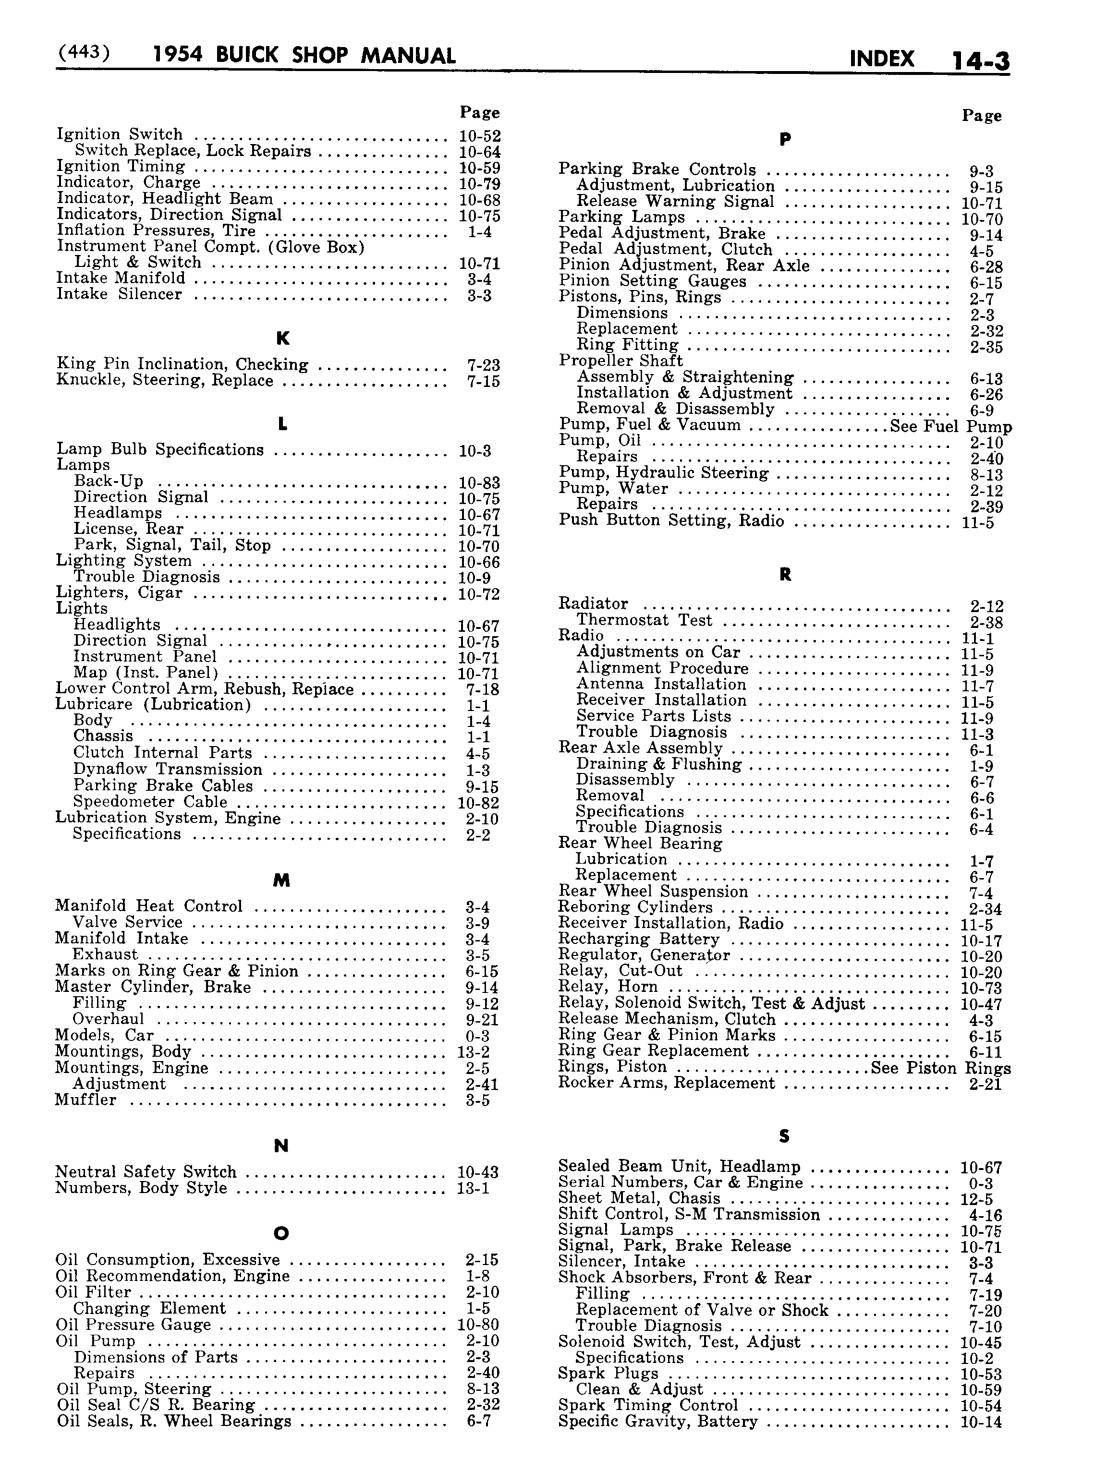 n_15 1954 Buick Shop Manual - Index-003-003.jpg